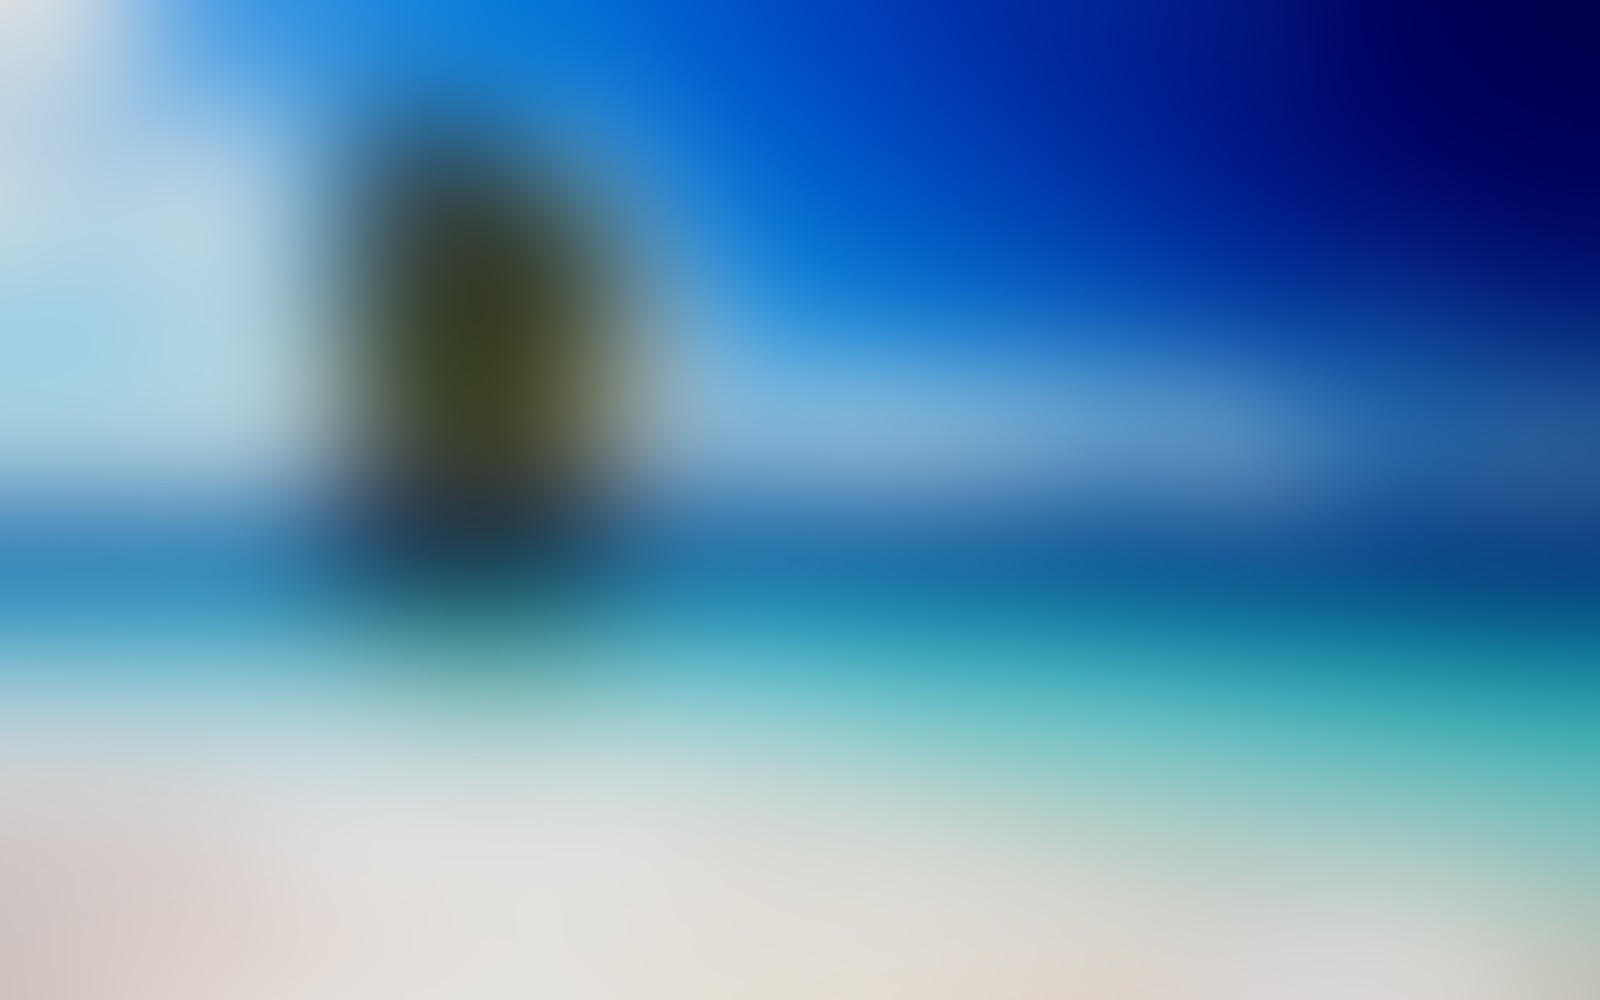 Blur Background Images For Website - 1600x1000 Wallpaper 